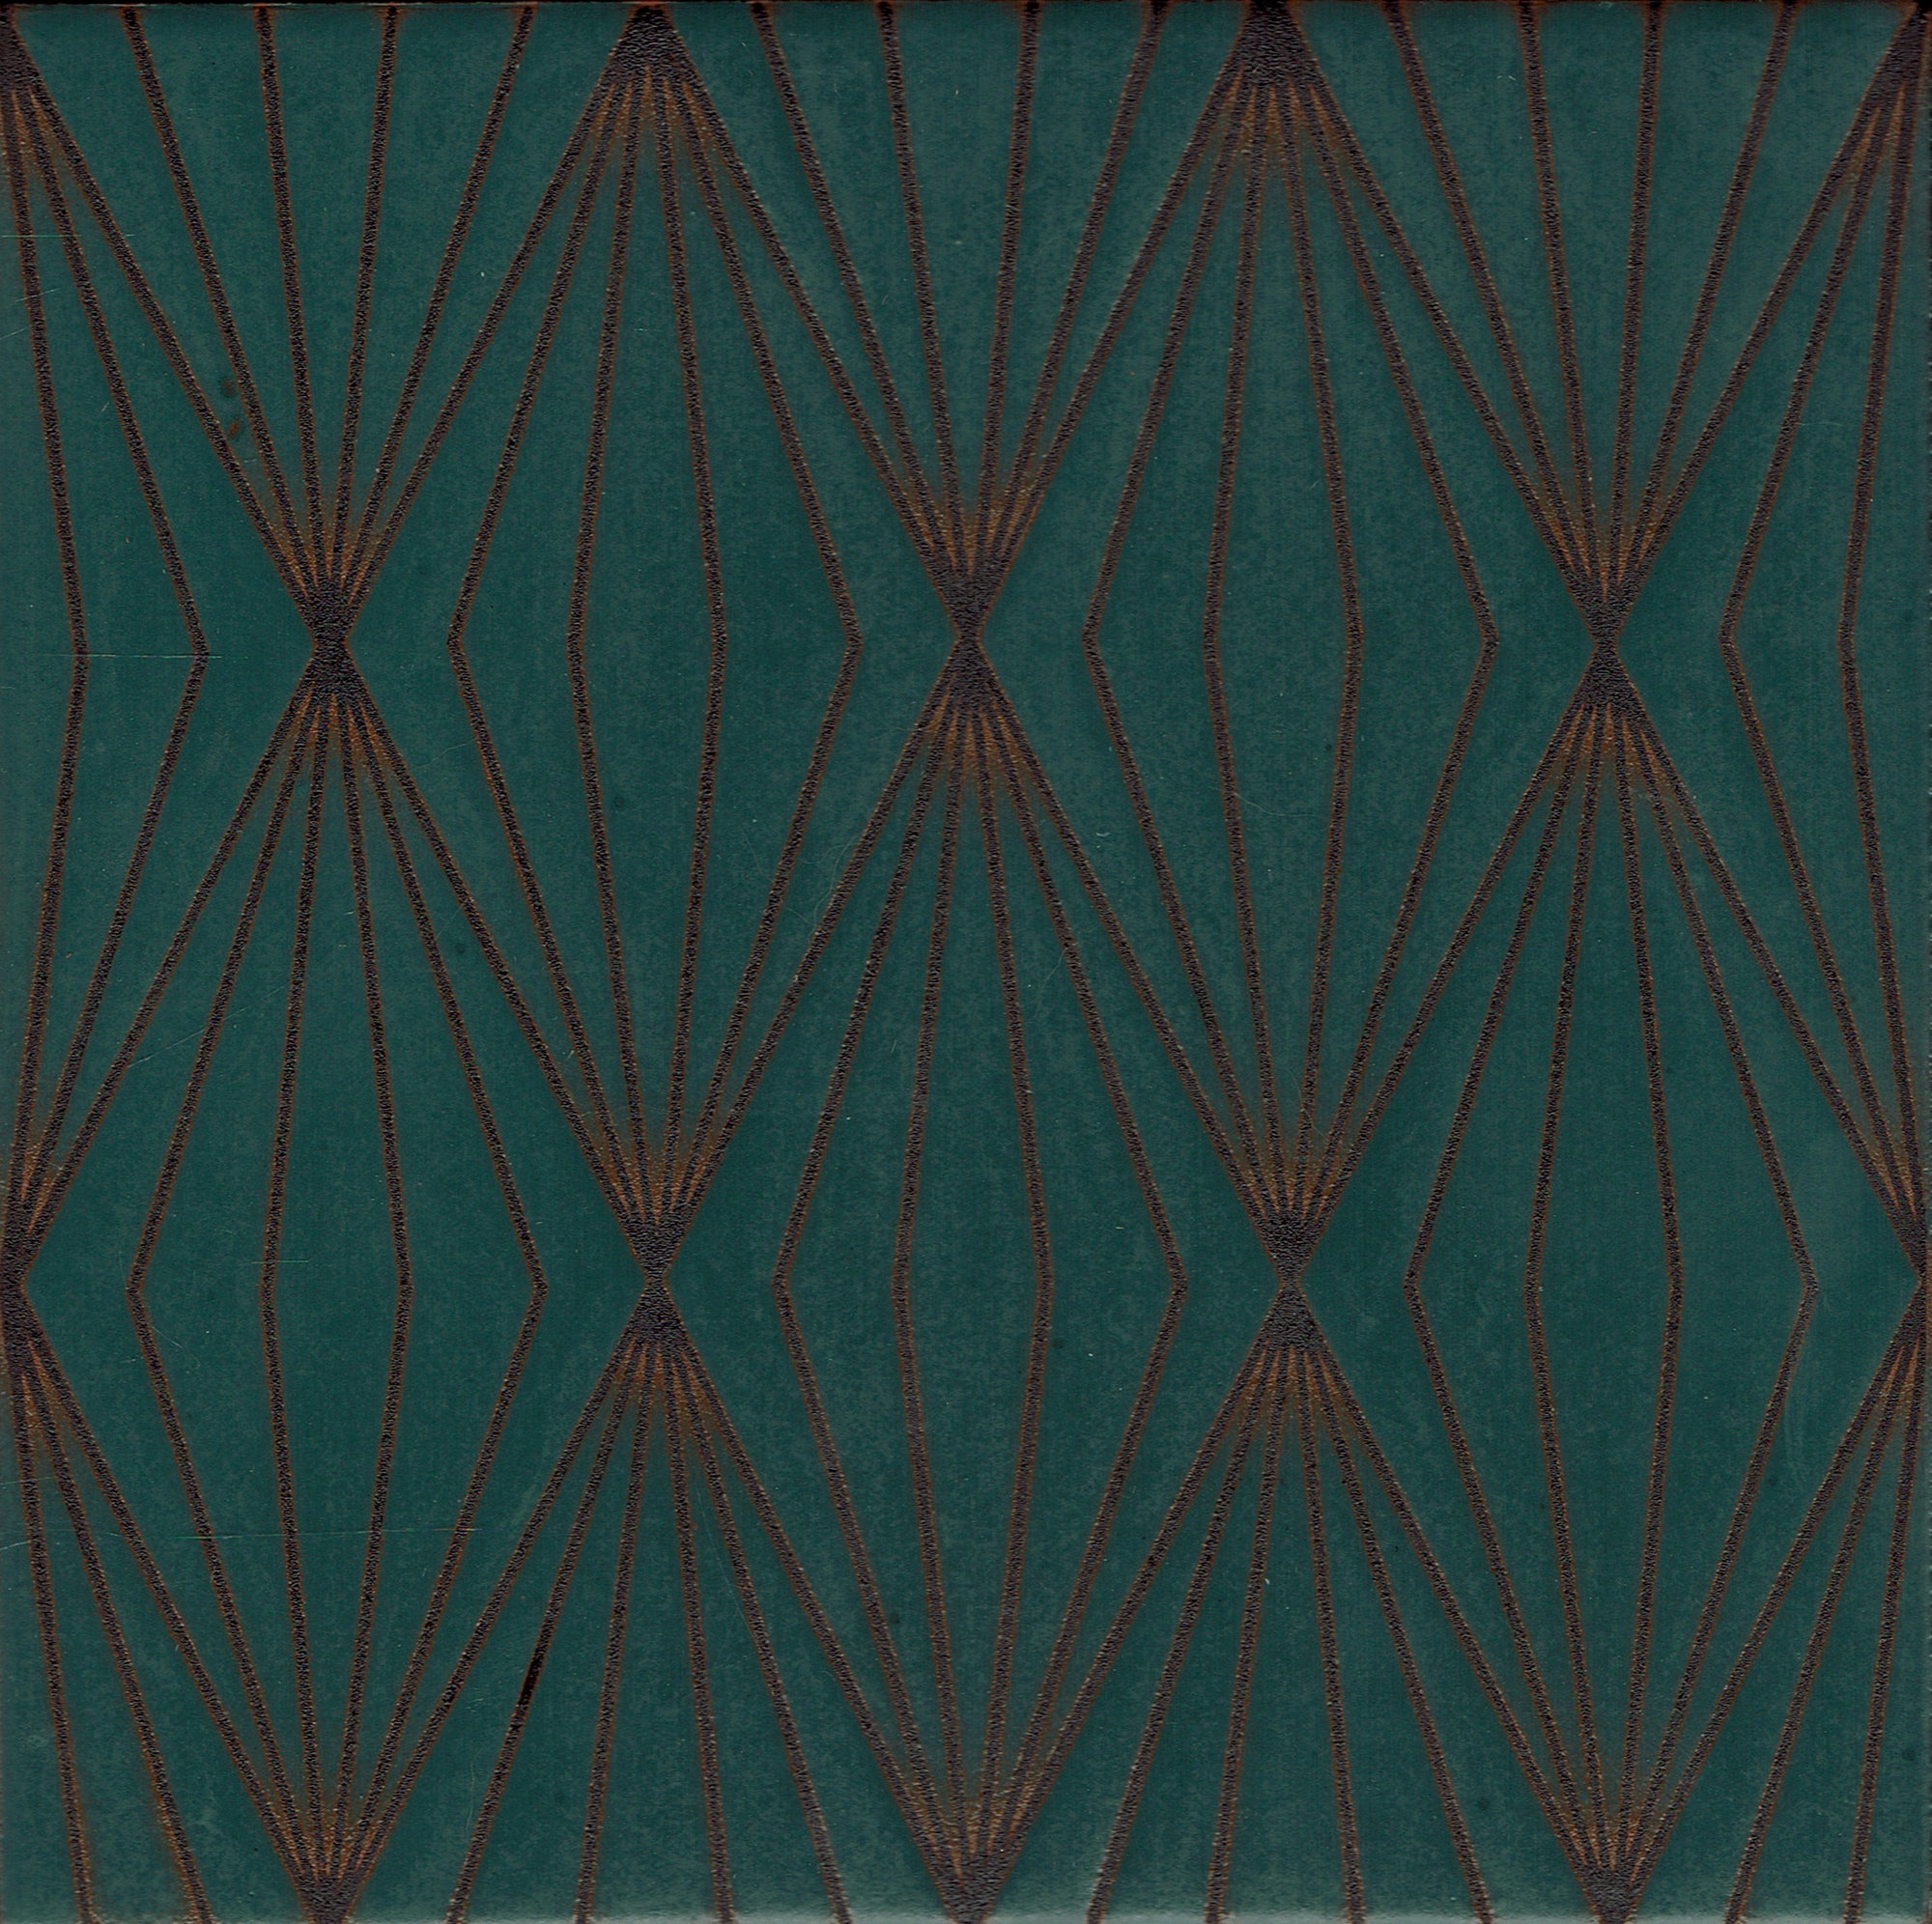 Uni Diamond in Dark Green (8"x8") - Handpainted Ceramic Tile Second for Kitchen, Bathroom, Wall & Table Decor